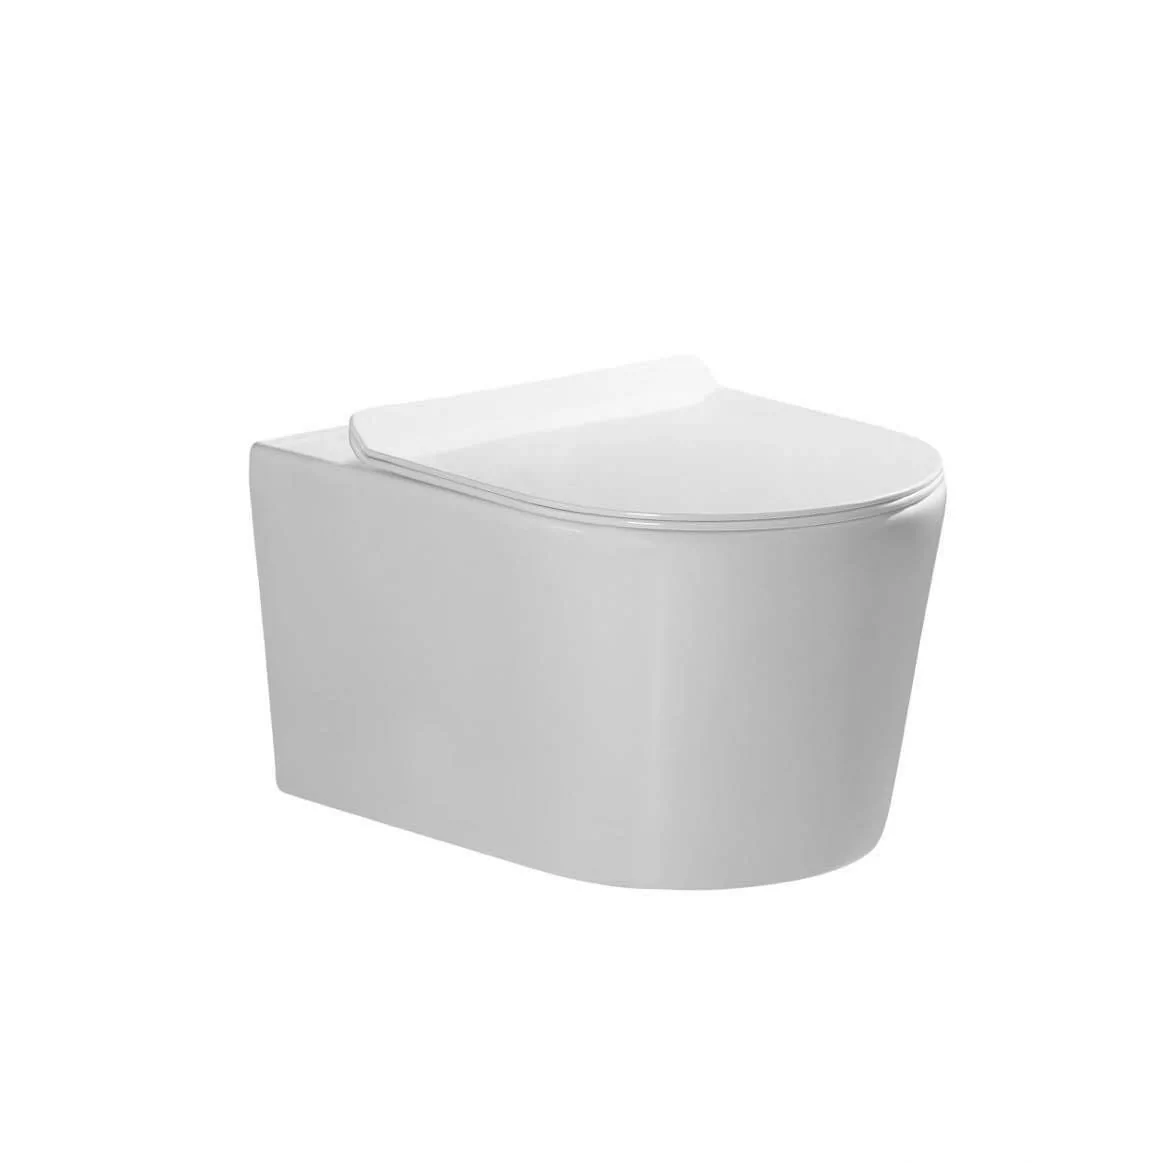 Miska WC Wisząca NOX 2.0 SuperFlush 53x36 + Deska Wolnopadająca Slim ABD02 Emporia